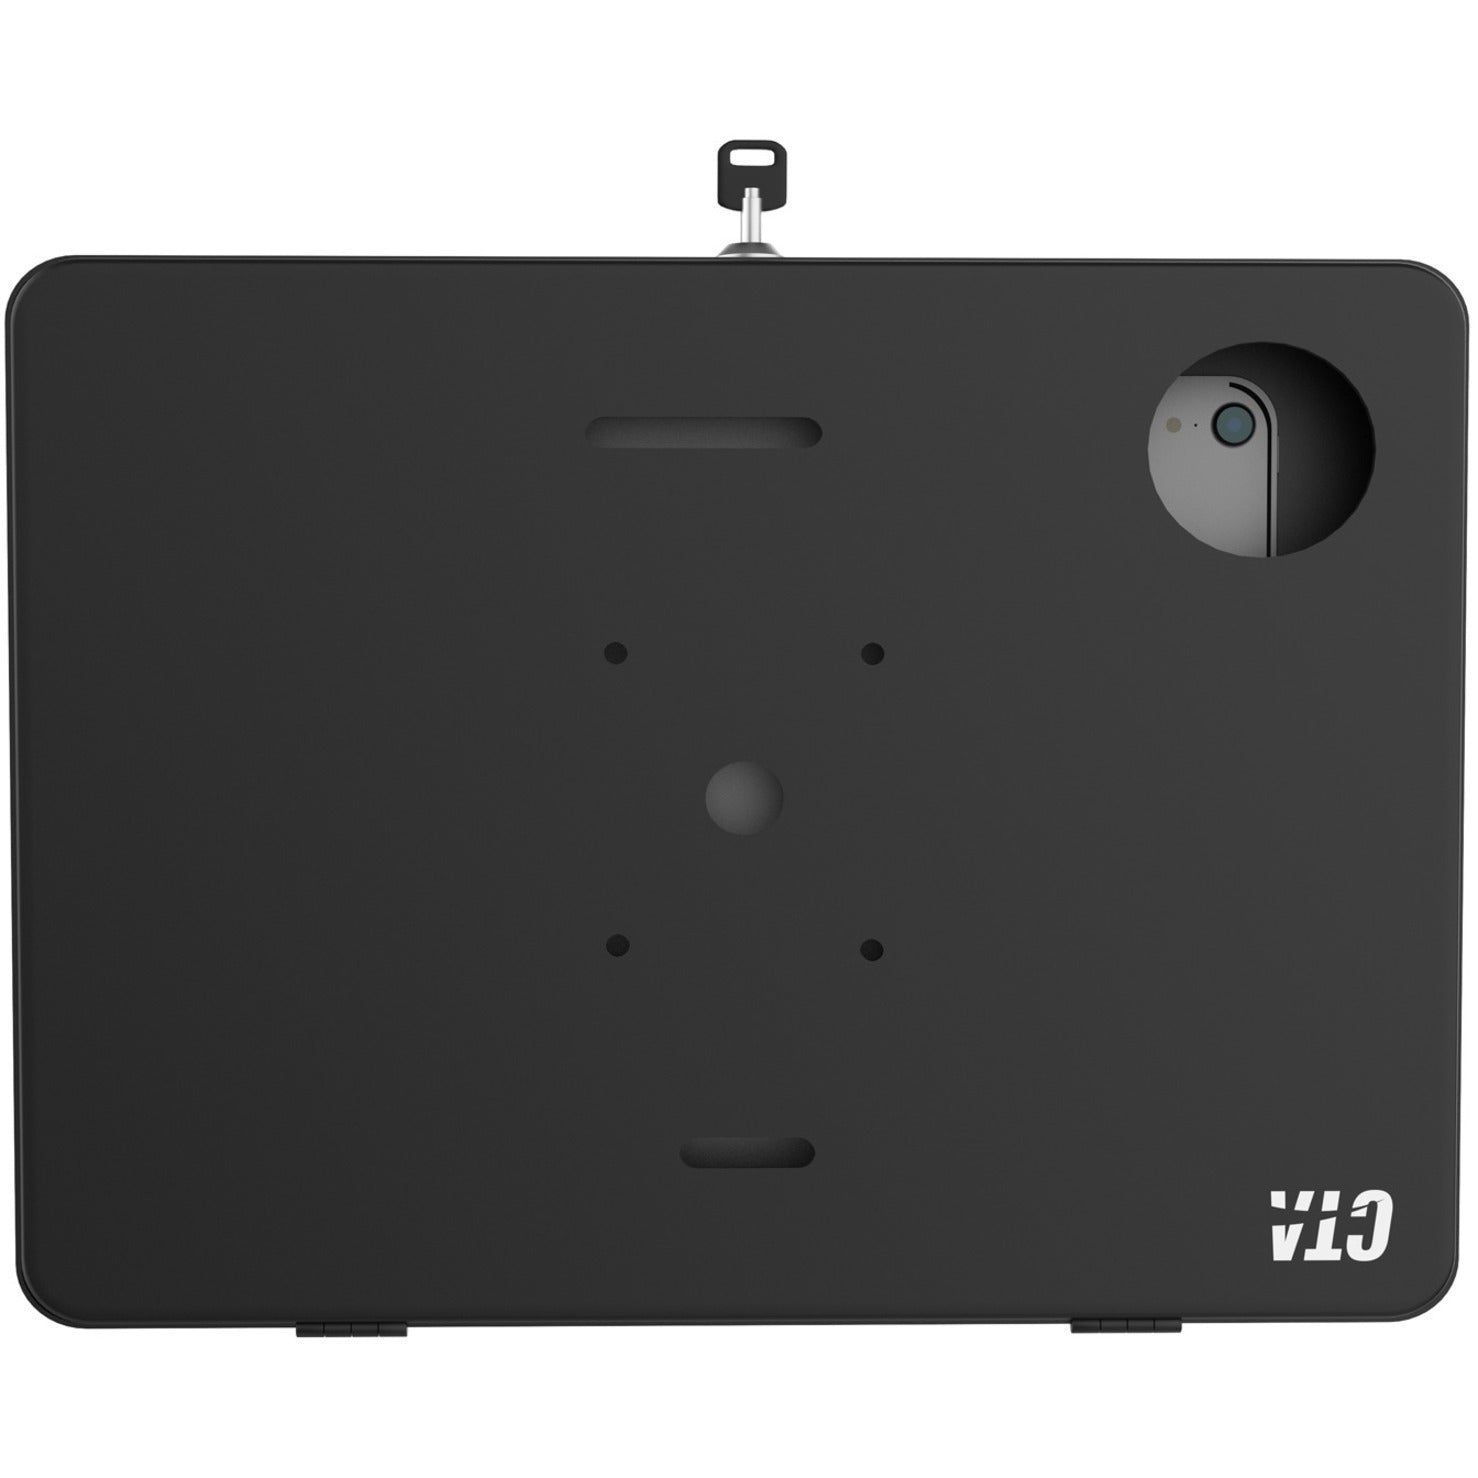 CTA Digital PAD-PSWB Premium Small Locking Wall Mount (Black), Heavy Duty, Anti-theft, Durable